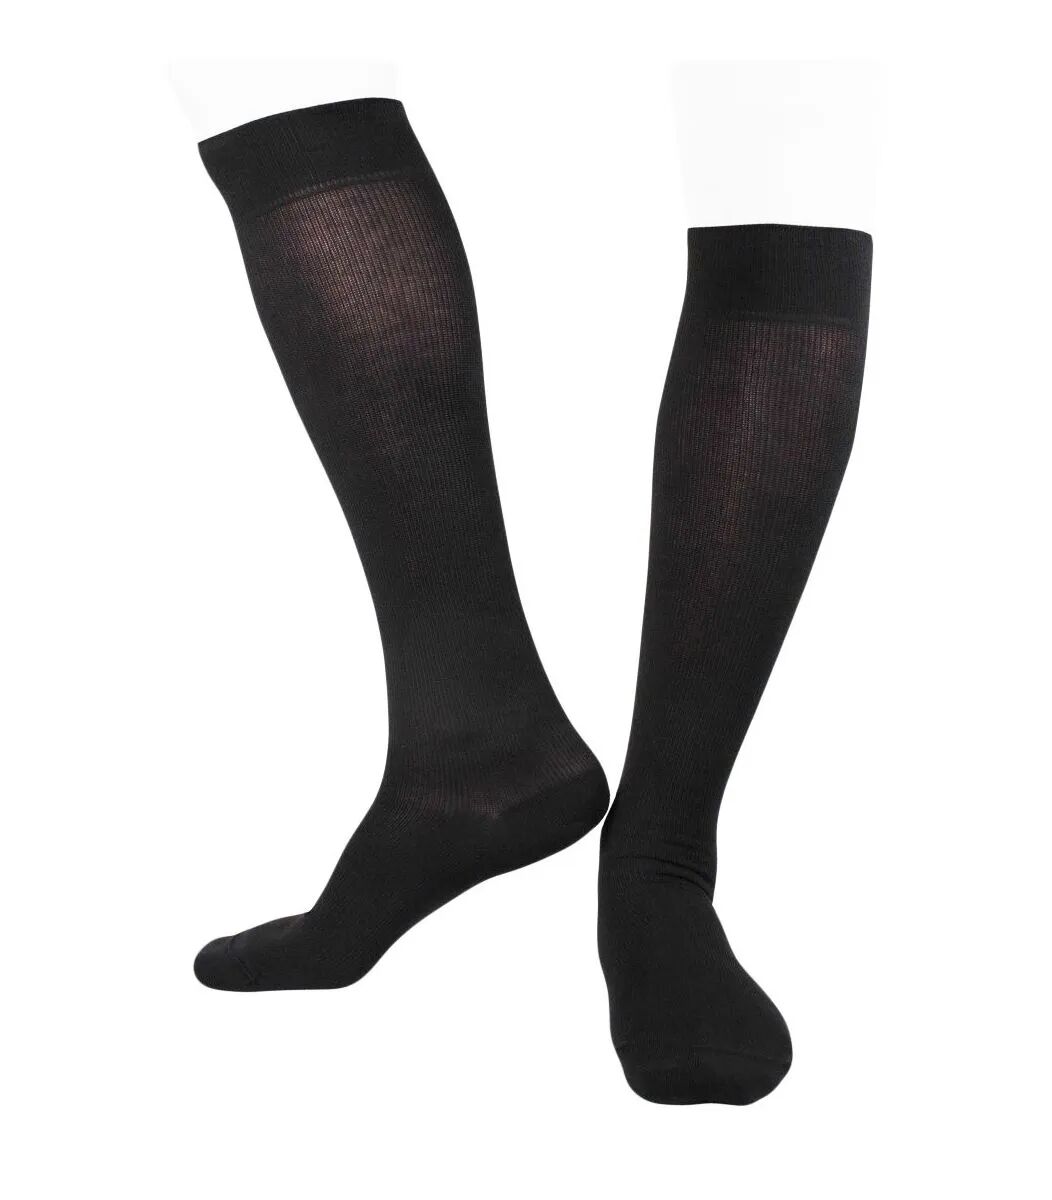 SAUBER Κάλτσες συμπίεσης 13-17mmHg, Βαμβάκι Small